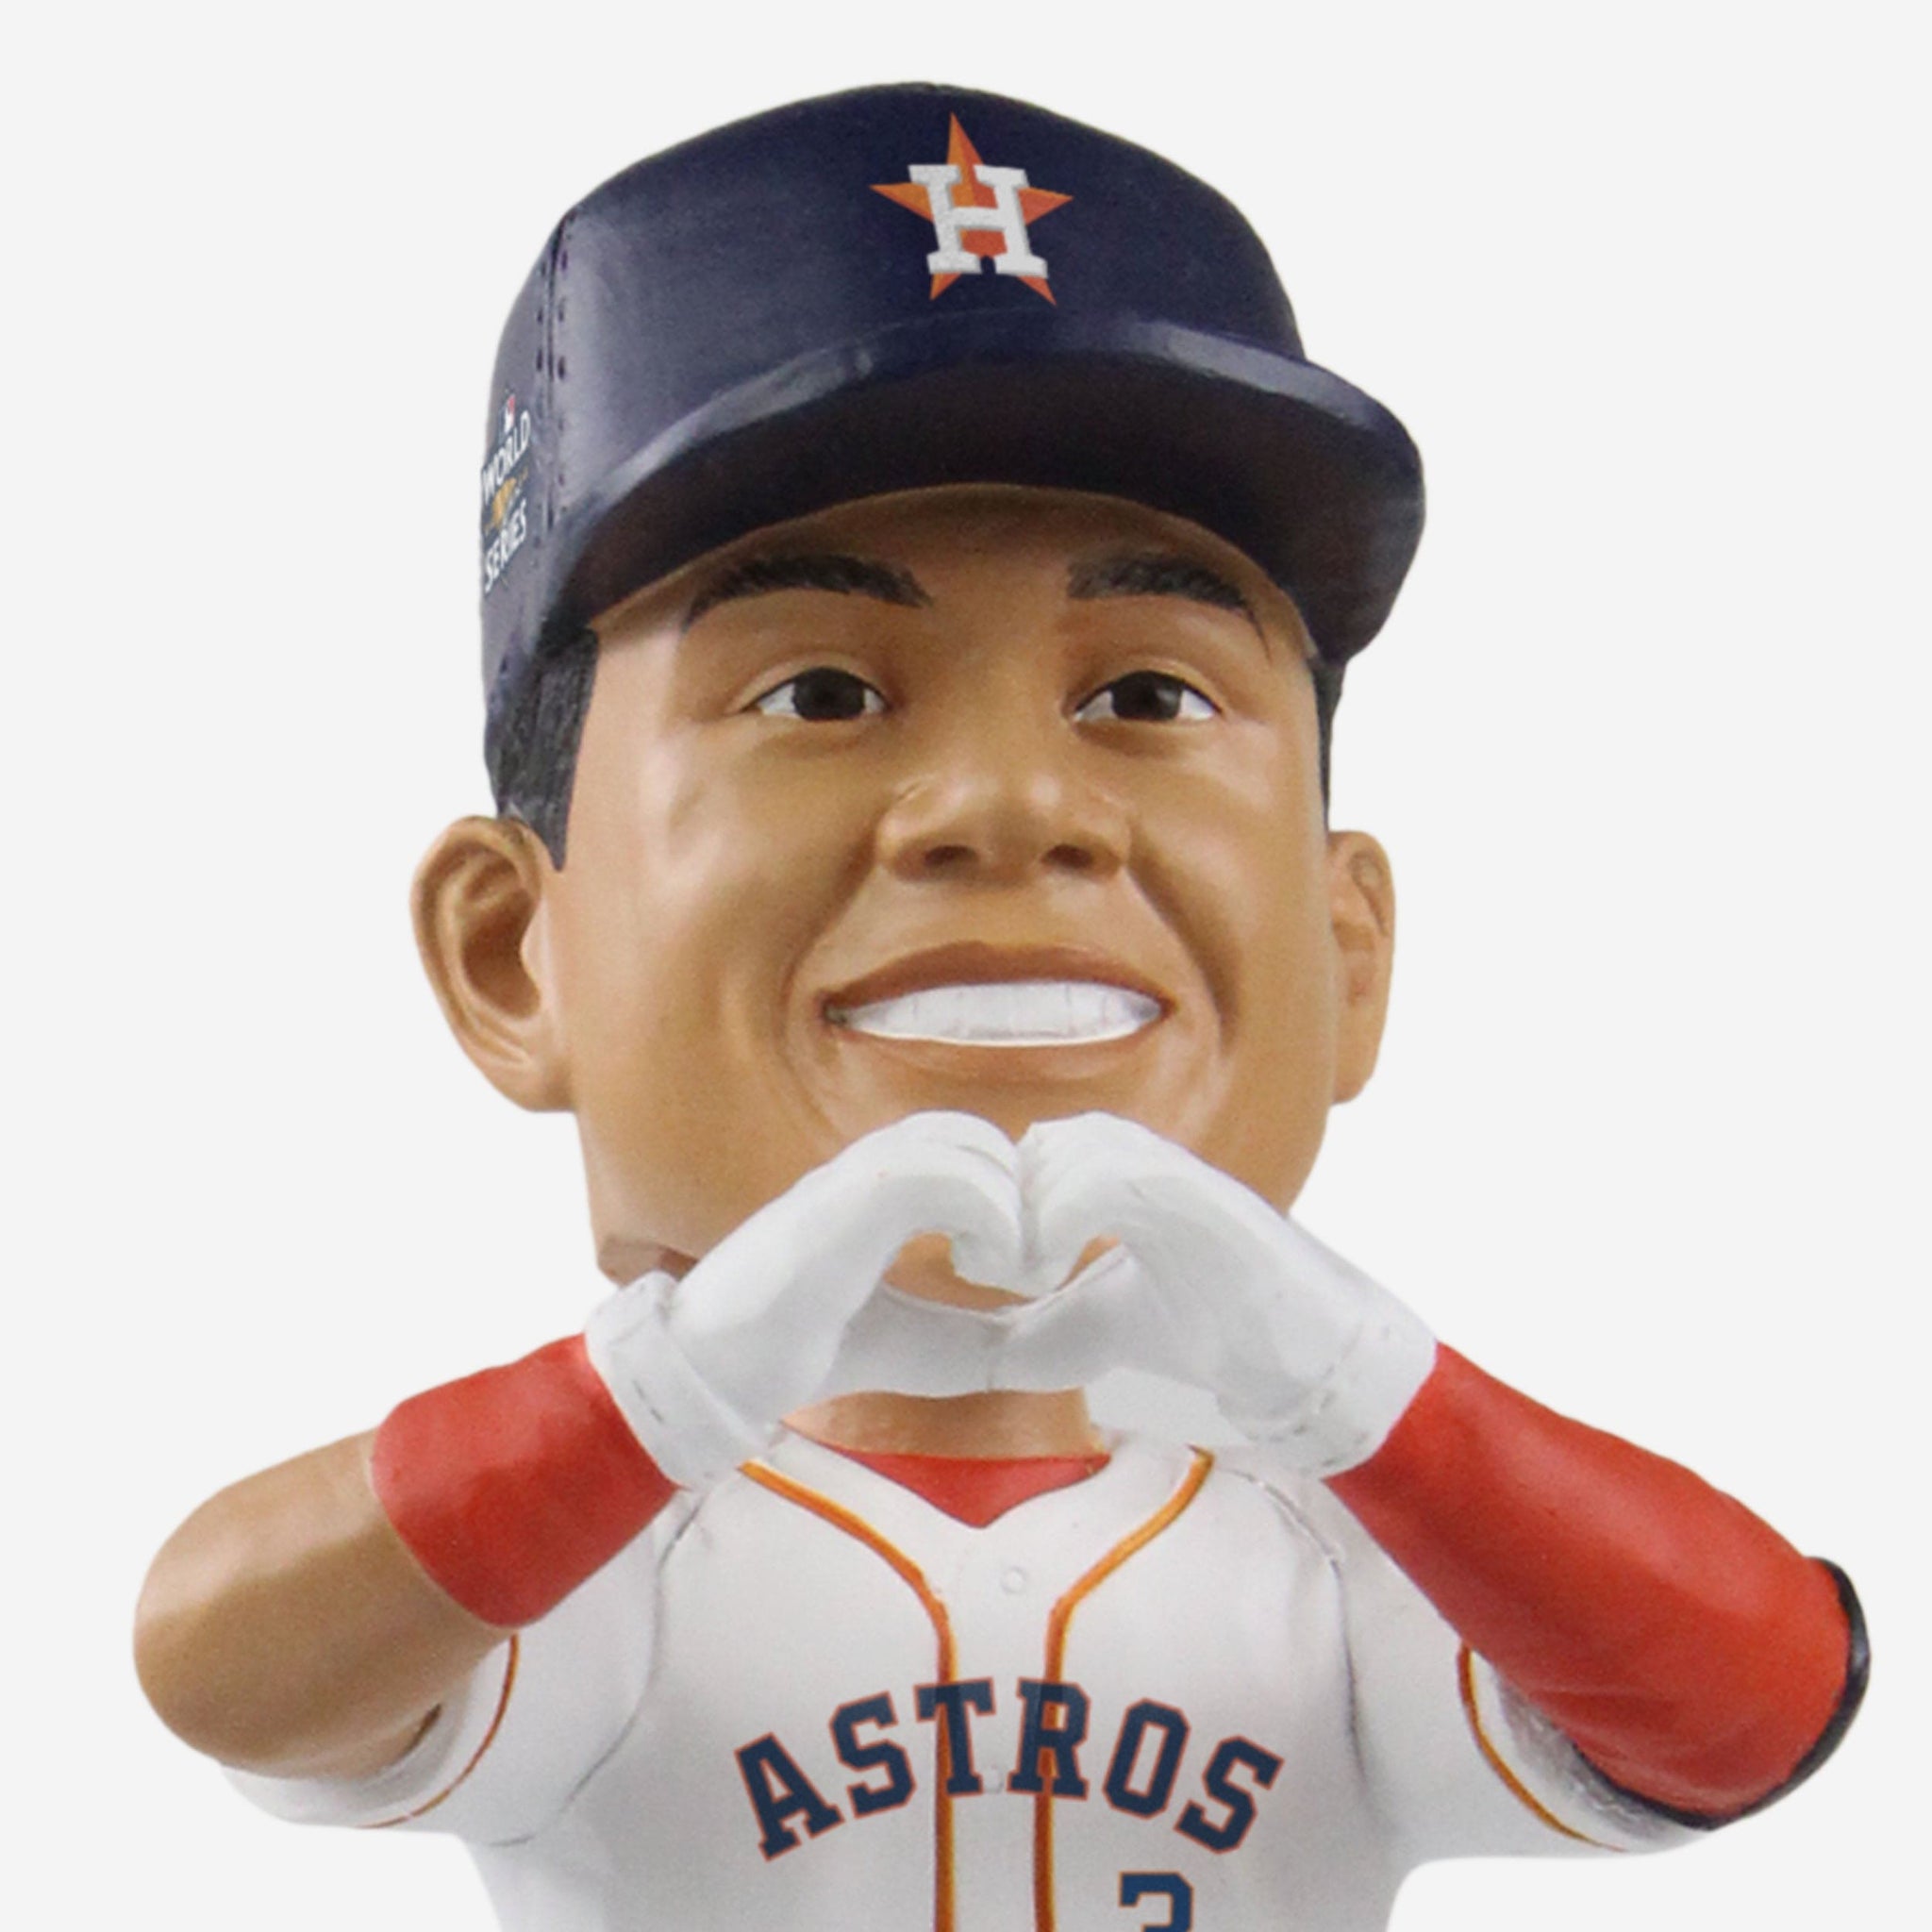 Jeremy Pena Houston Astros 2022 World Series Champions 8 Bobblehead Bobble  Head Doll